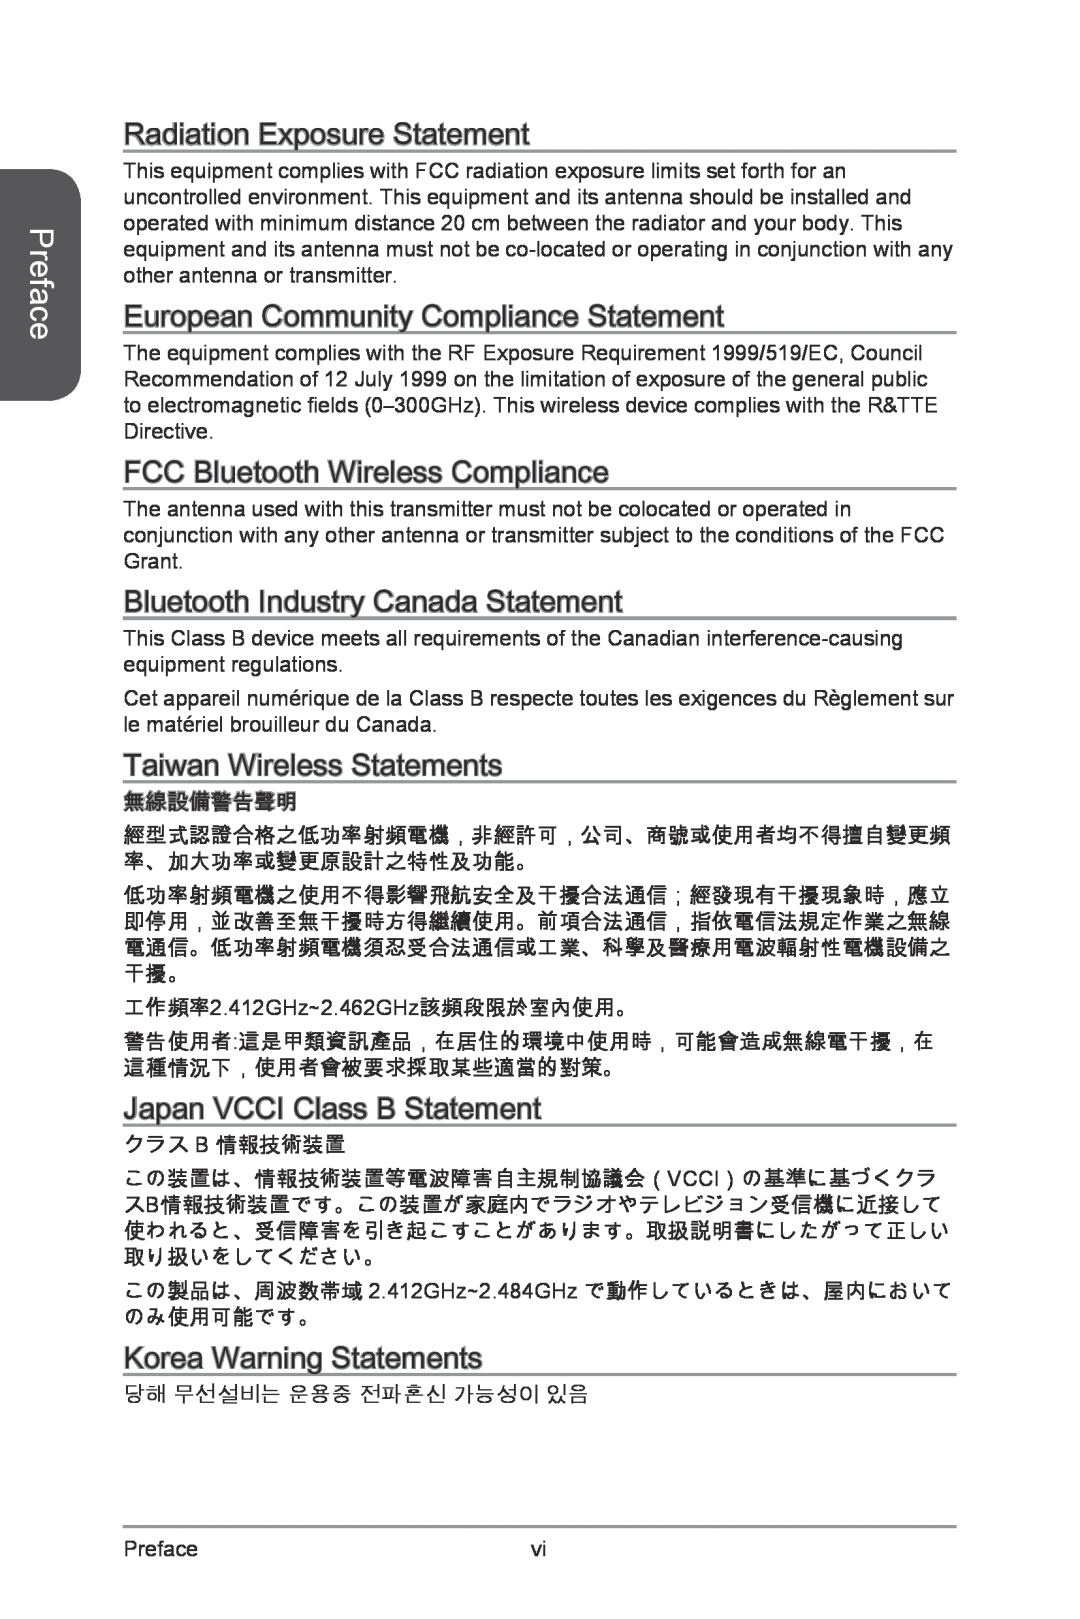 MSI Z87-XPOWER Radiation Exposure Statement, European Community Compliance Statement, FCC Bluetooth Wireless Compliance 